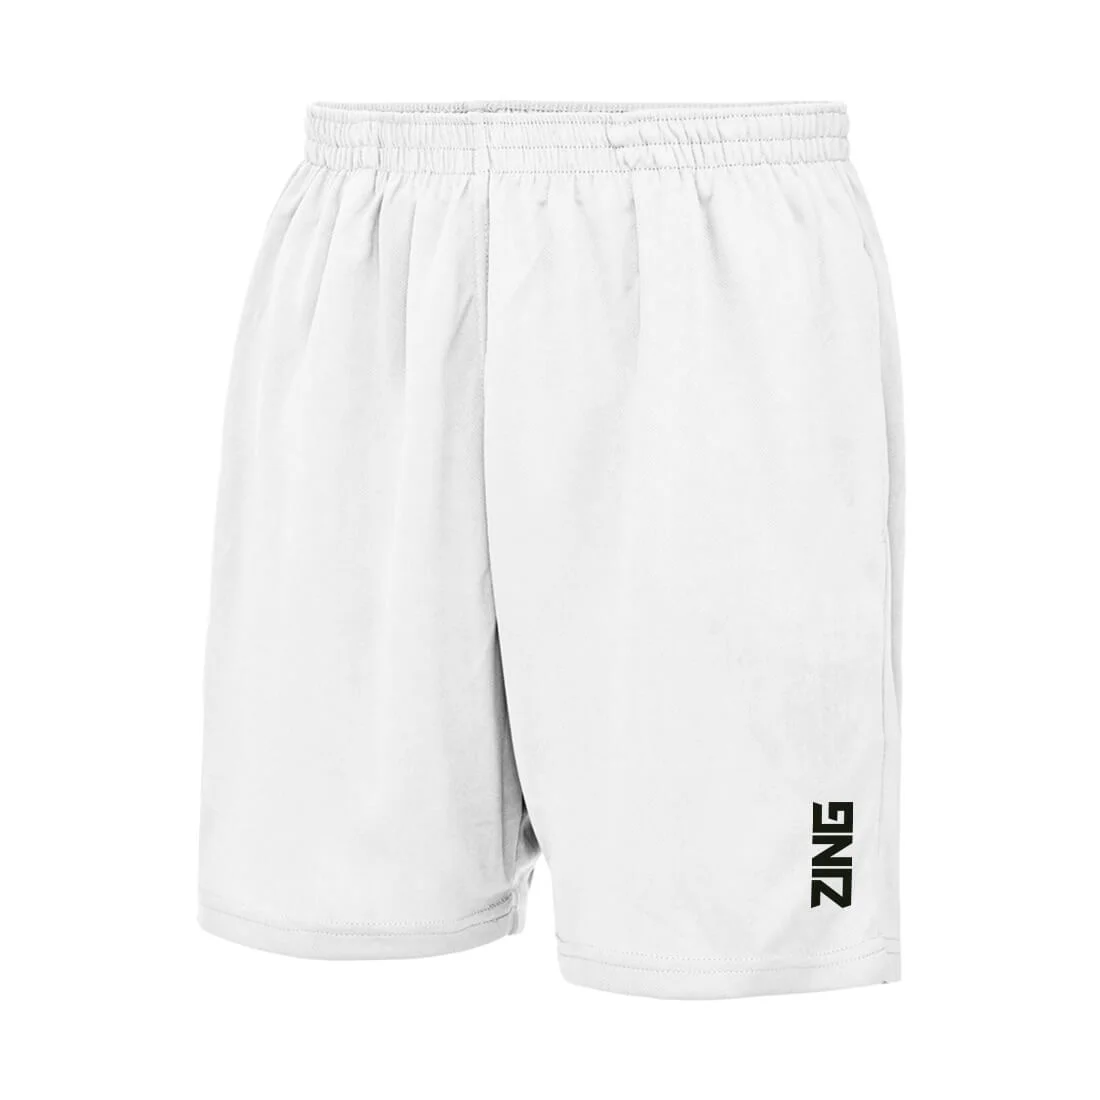 ZING Sportswear Training Shorts | Training Kit and Teamwear - White